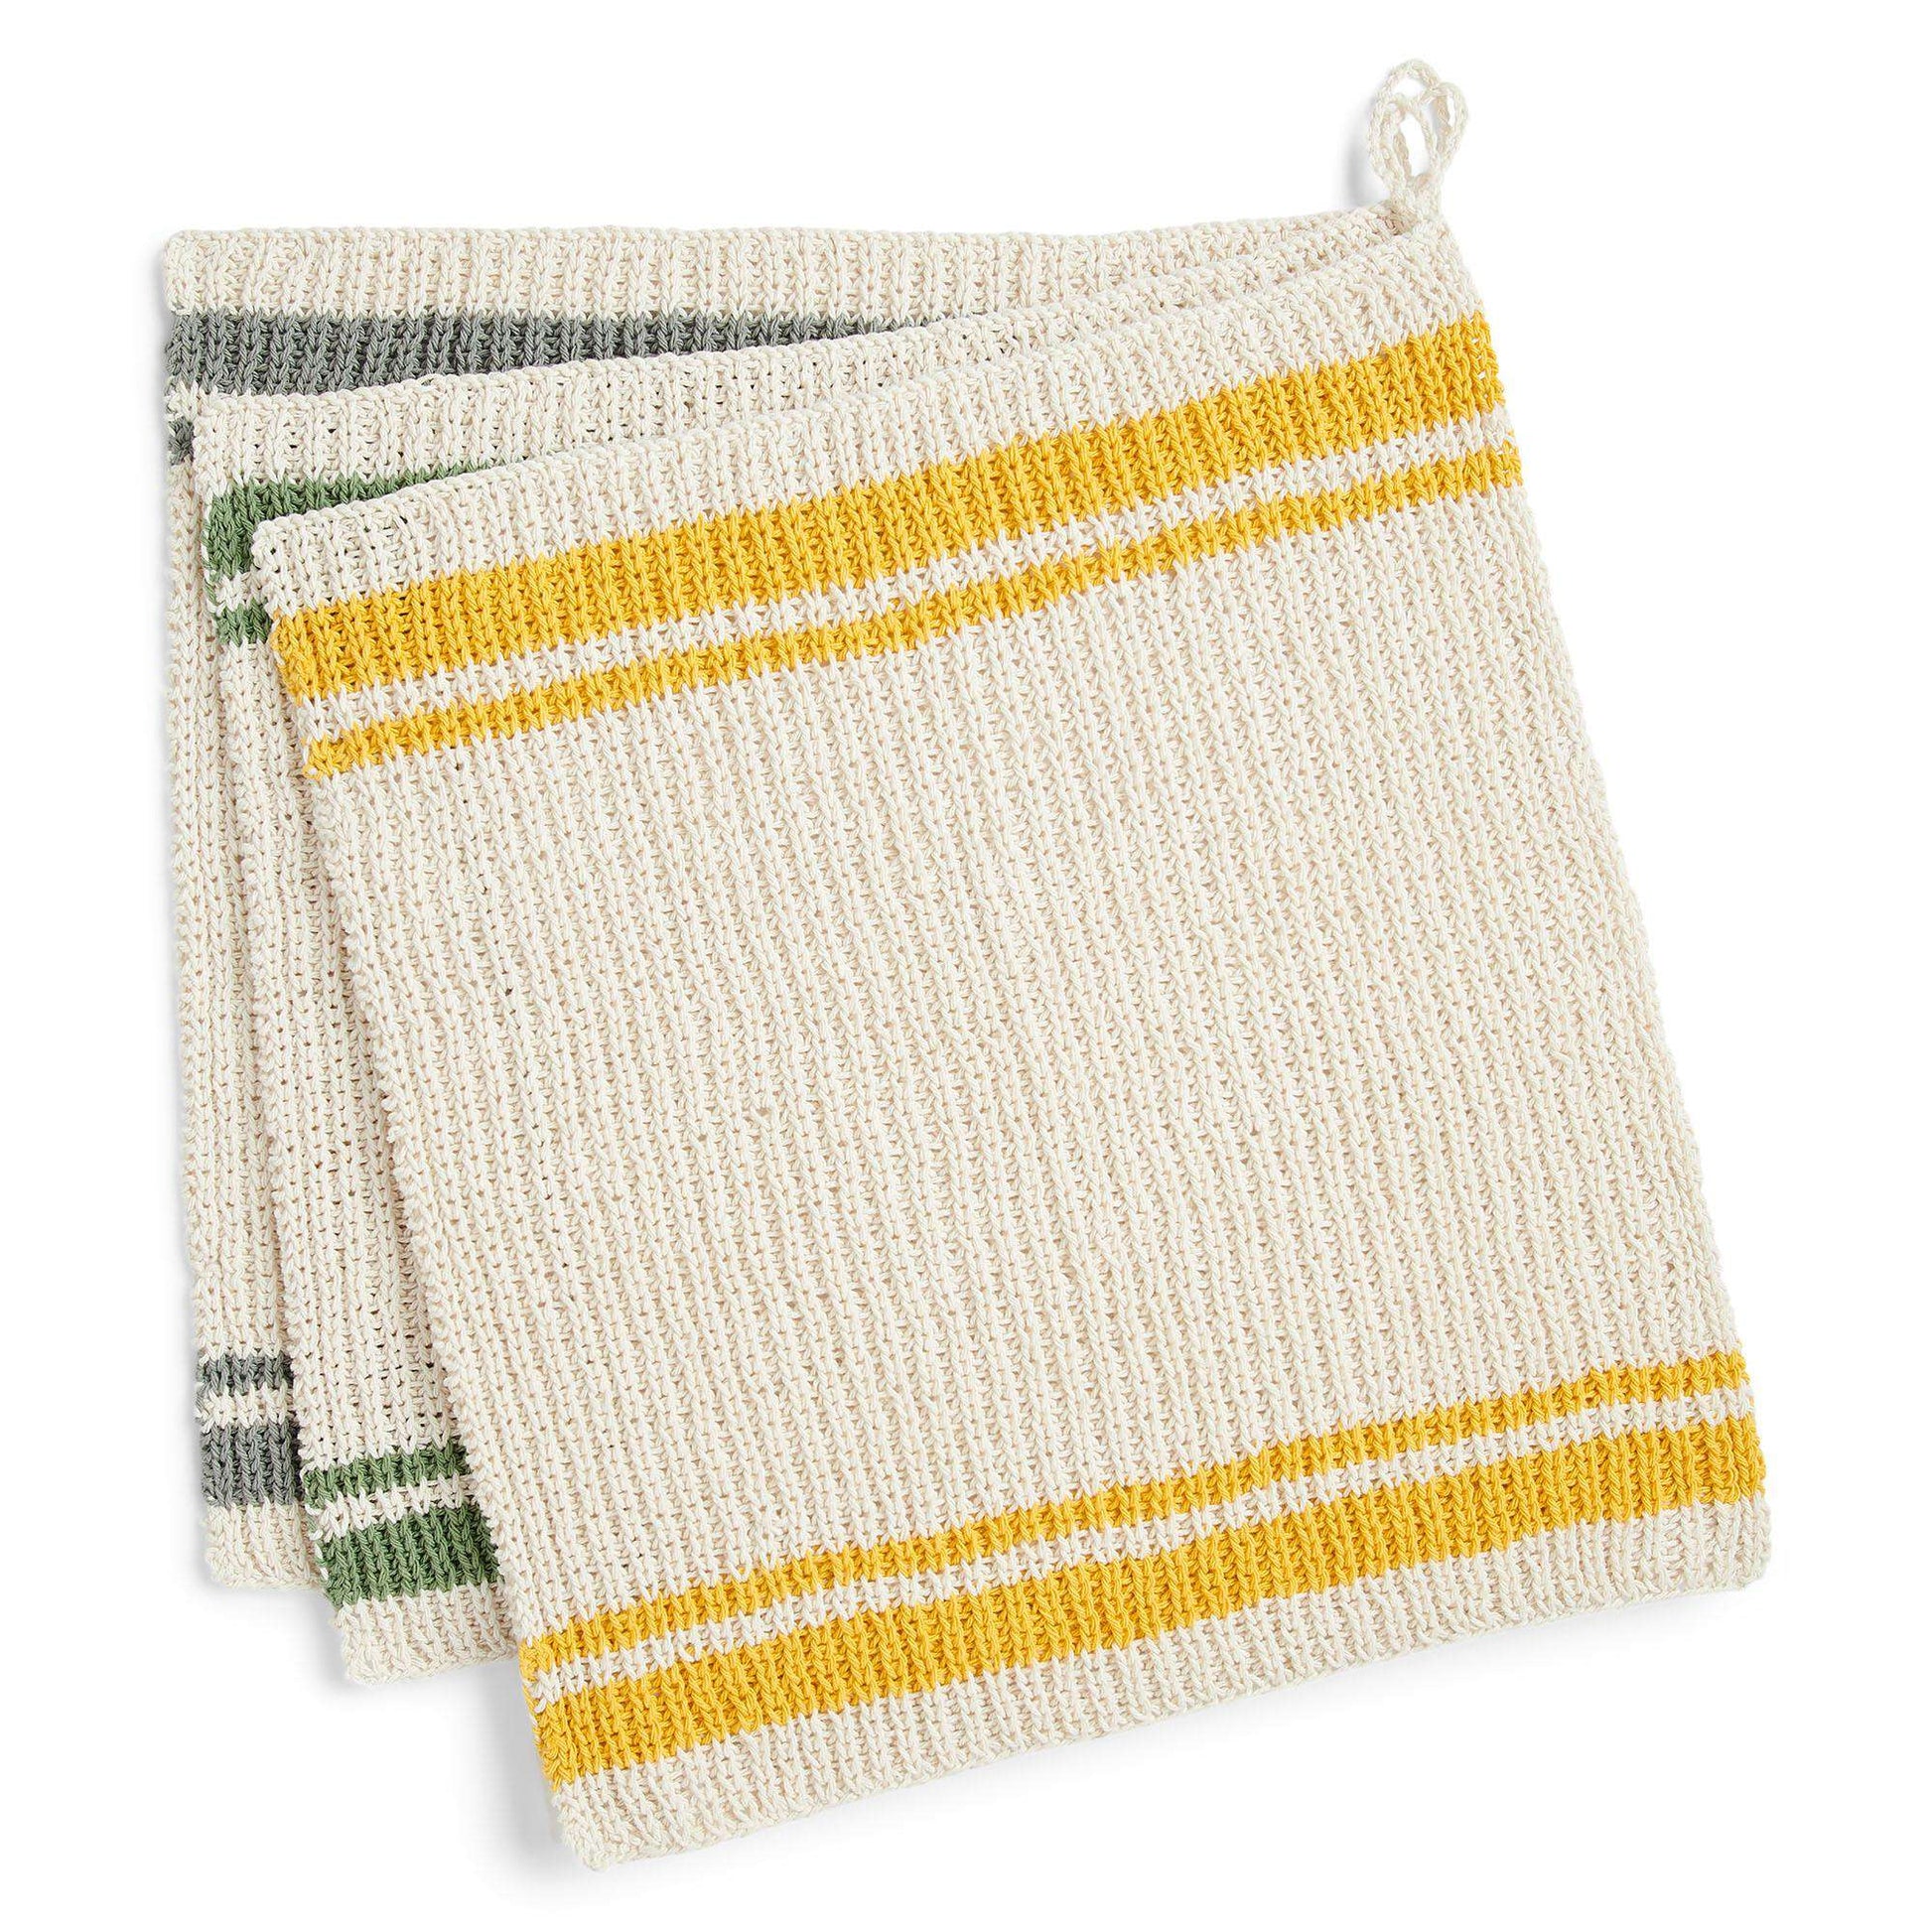 Kitchen Dish Towels Knitting Pattern Download